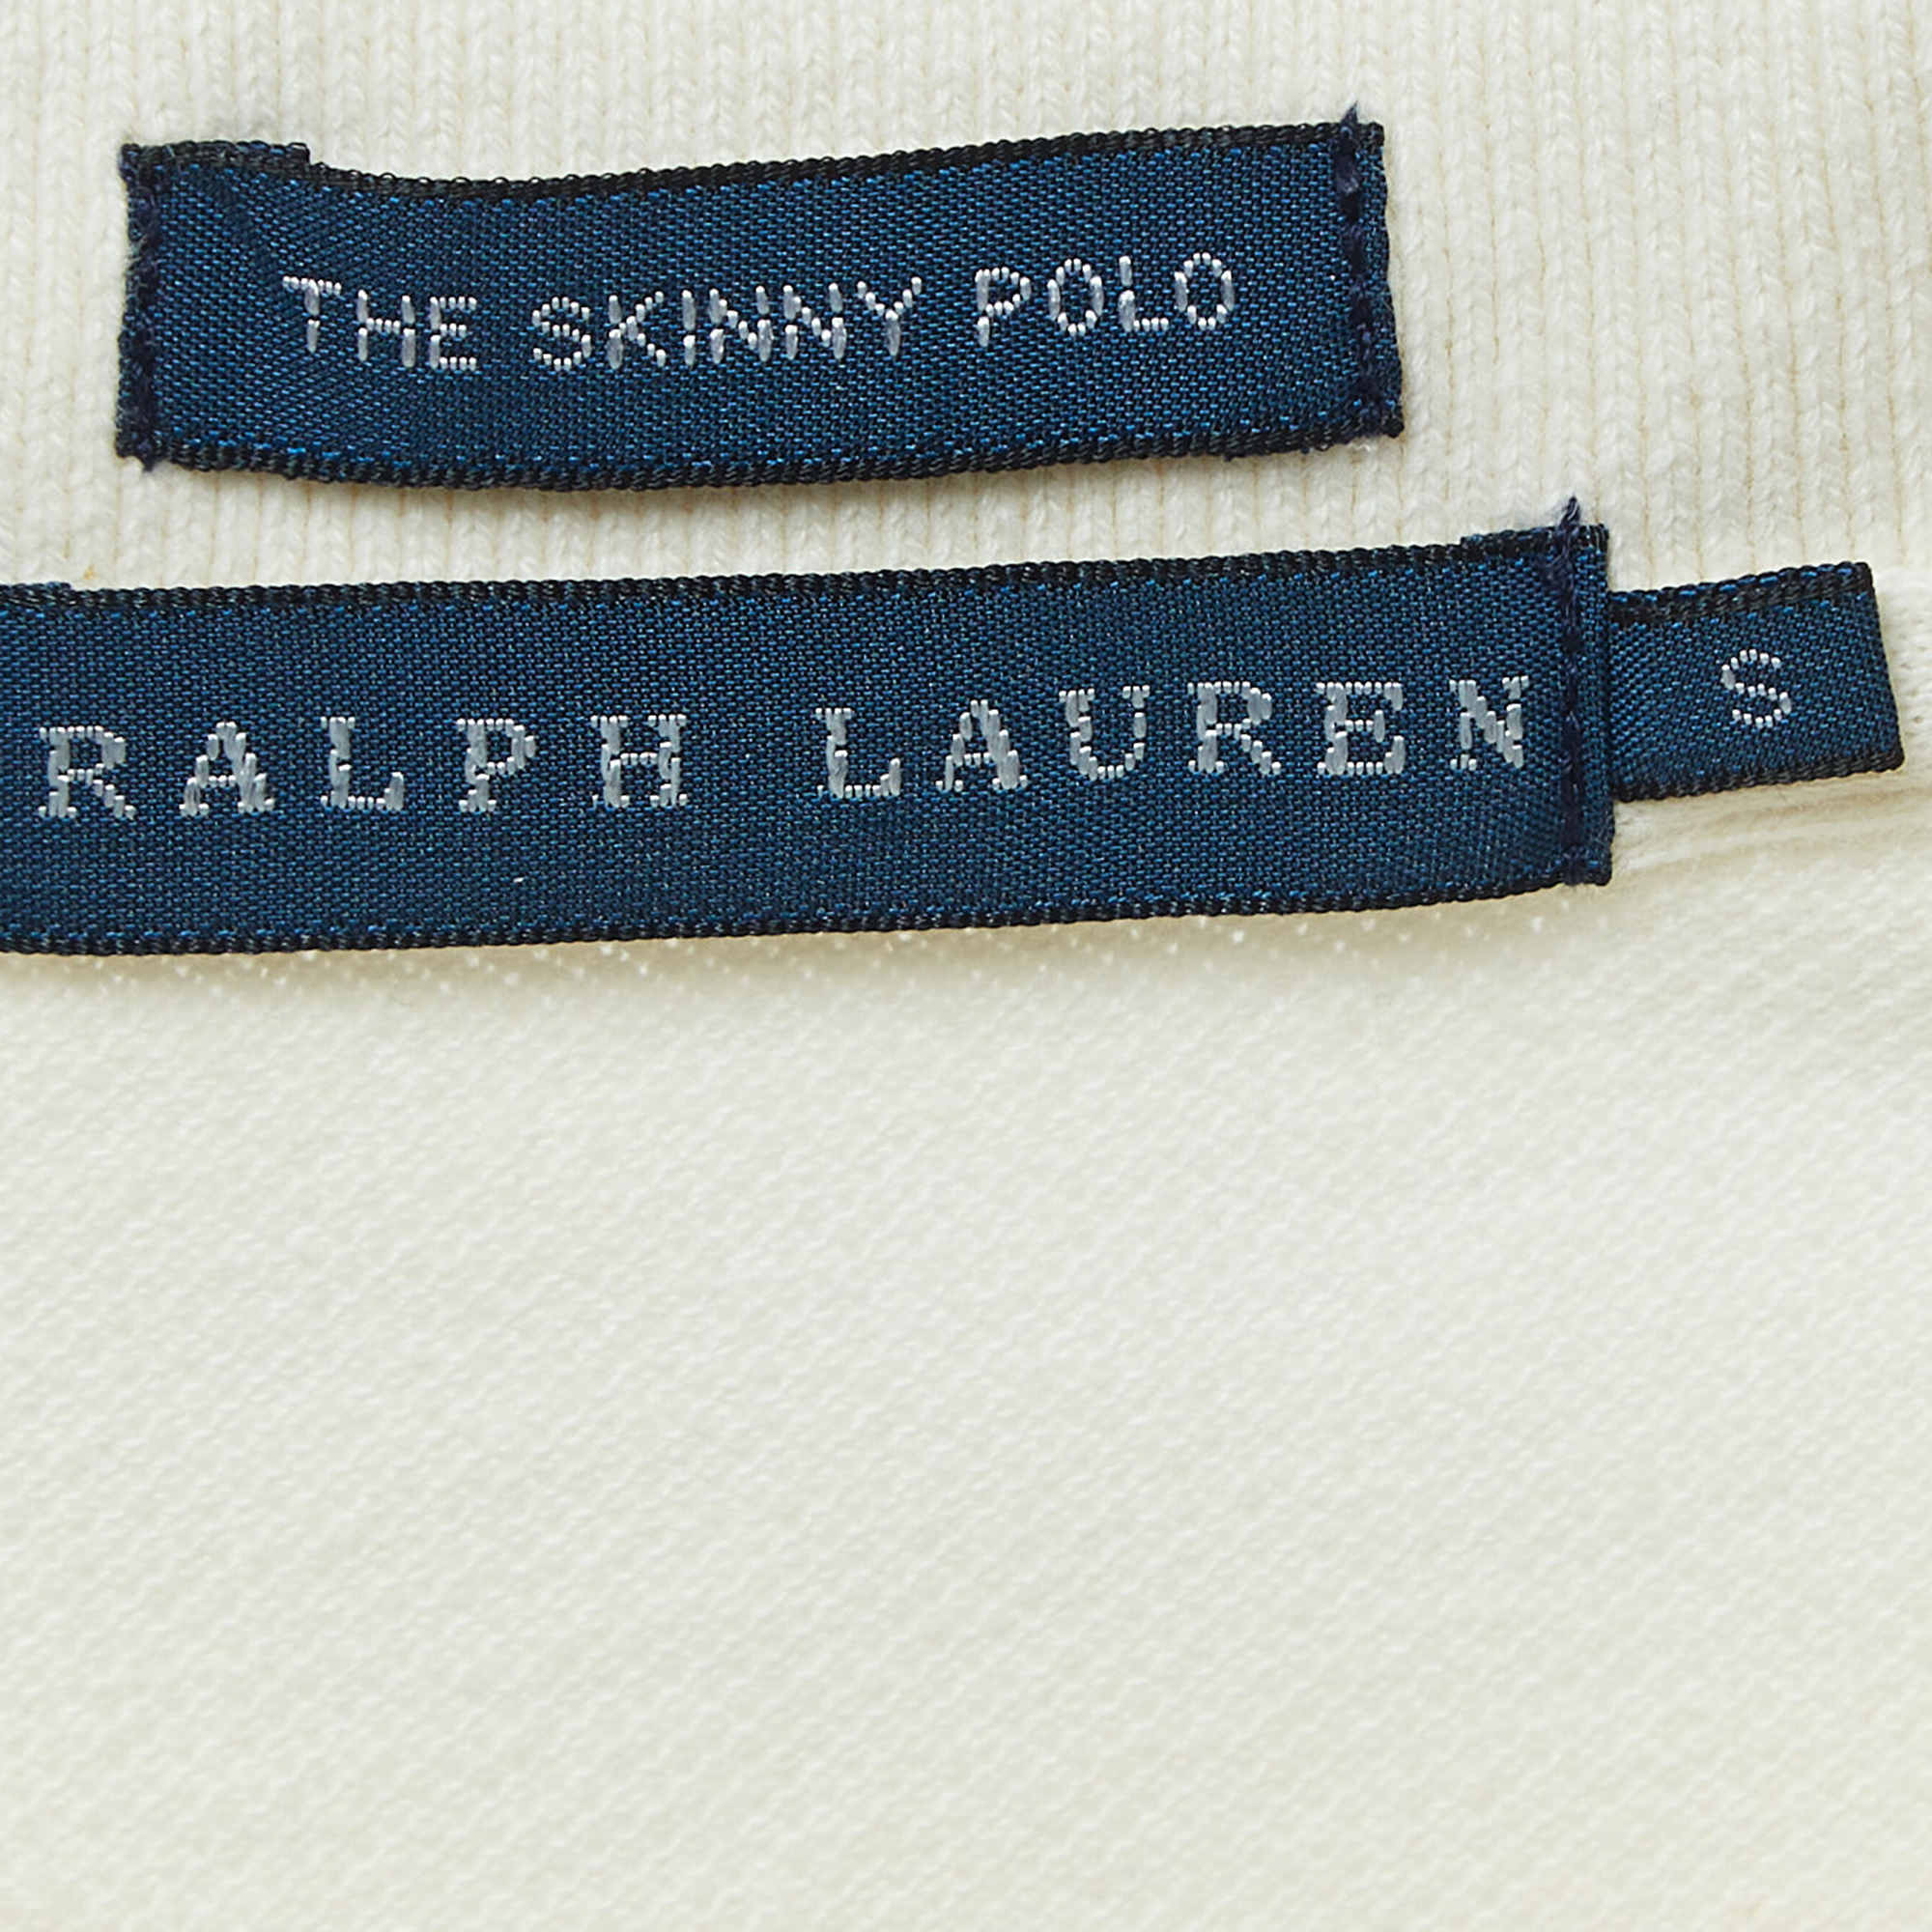 Ralph Lauren Cream Cotton Logo Patch Skinny Polo T-Shirt S